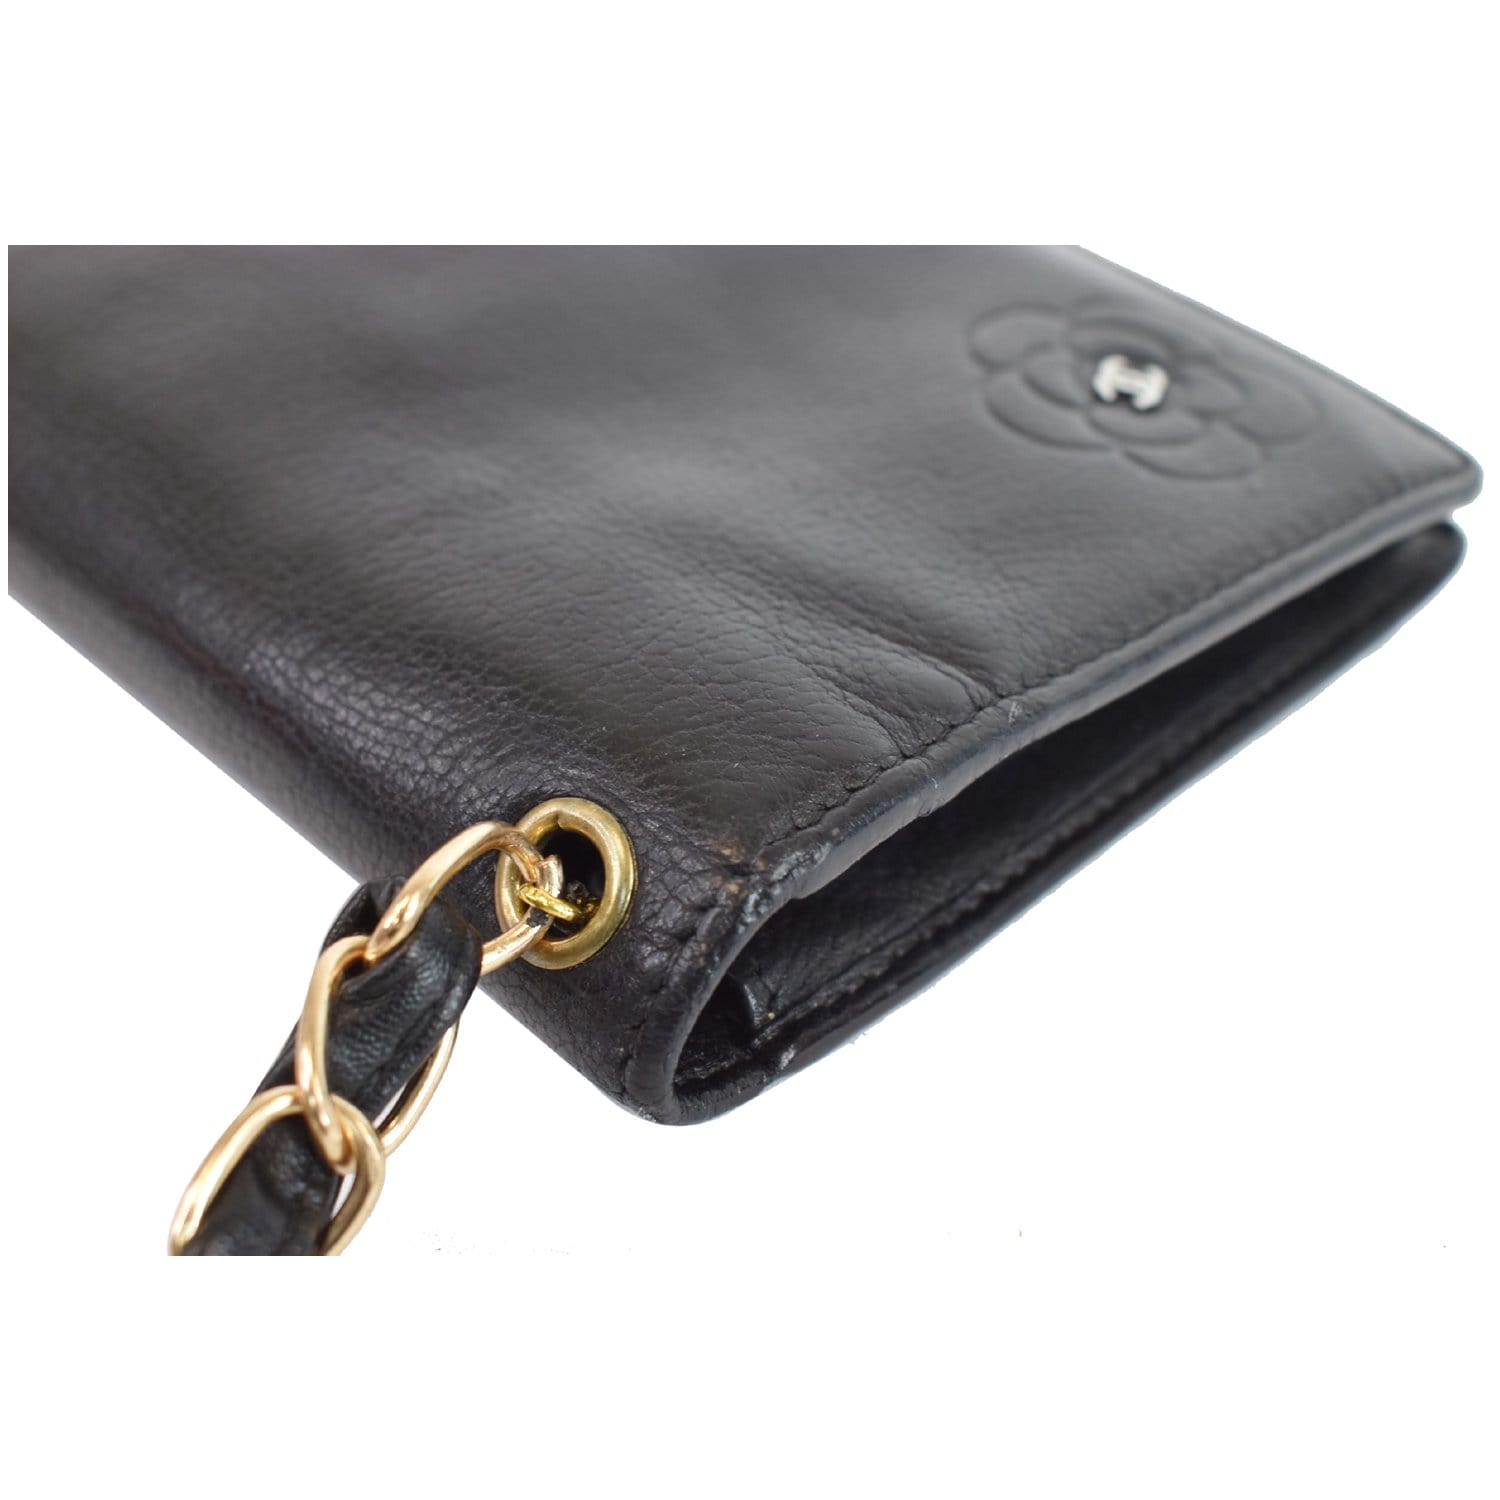 Chanel Camellia Leather Wallet on Chain Shoulder Bag